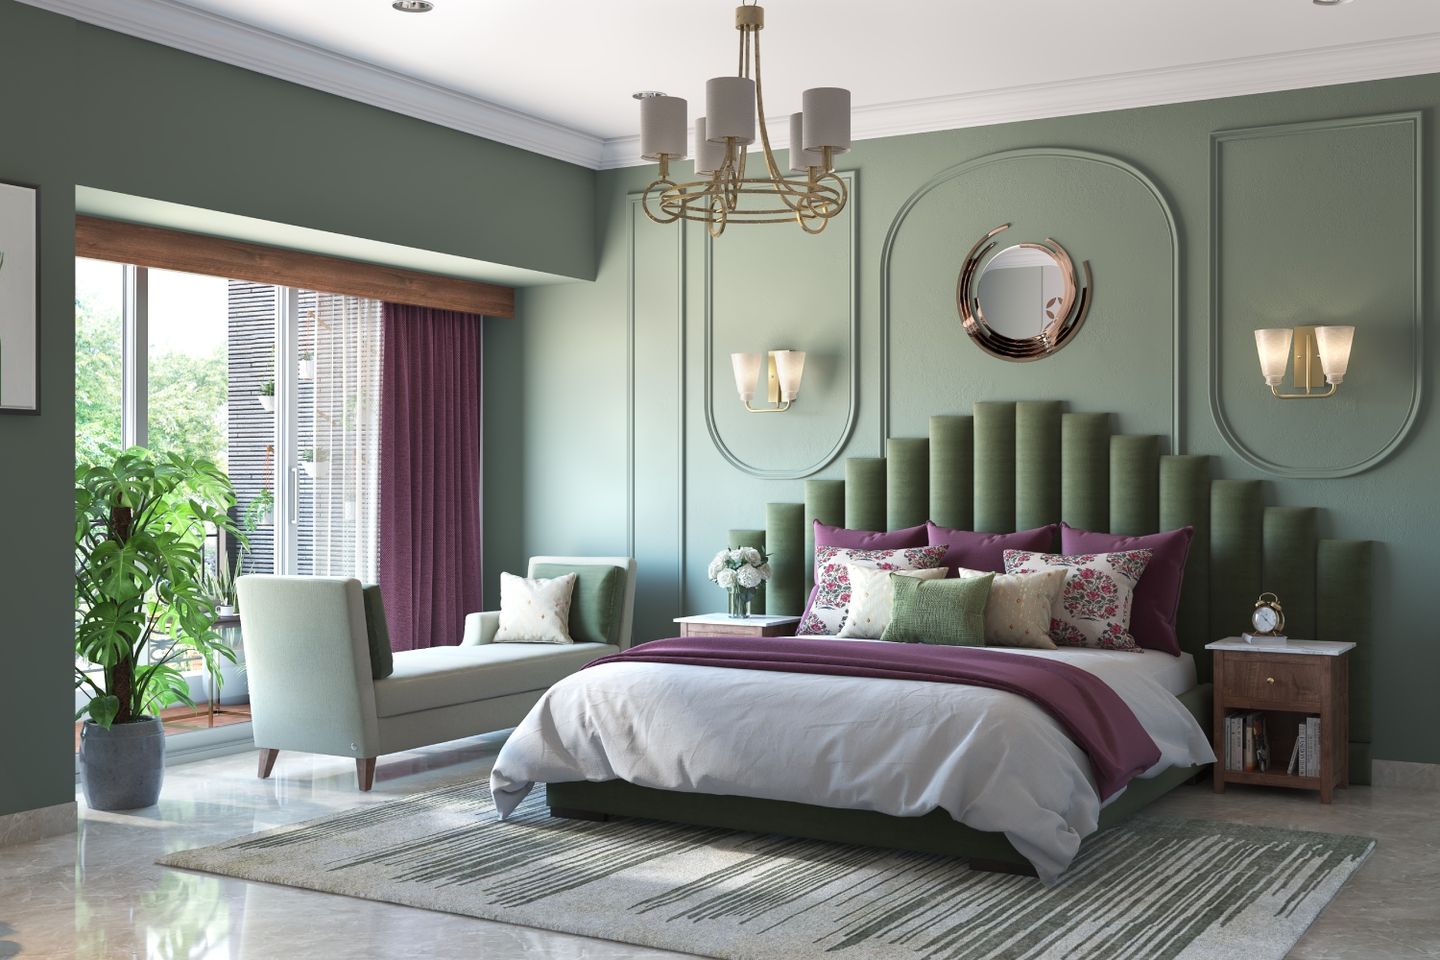 Classic Green Bedroom Wall Paint Design - Livspace